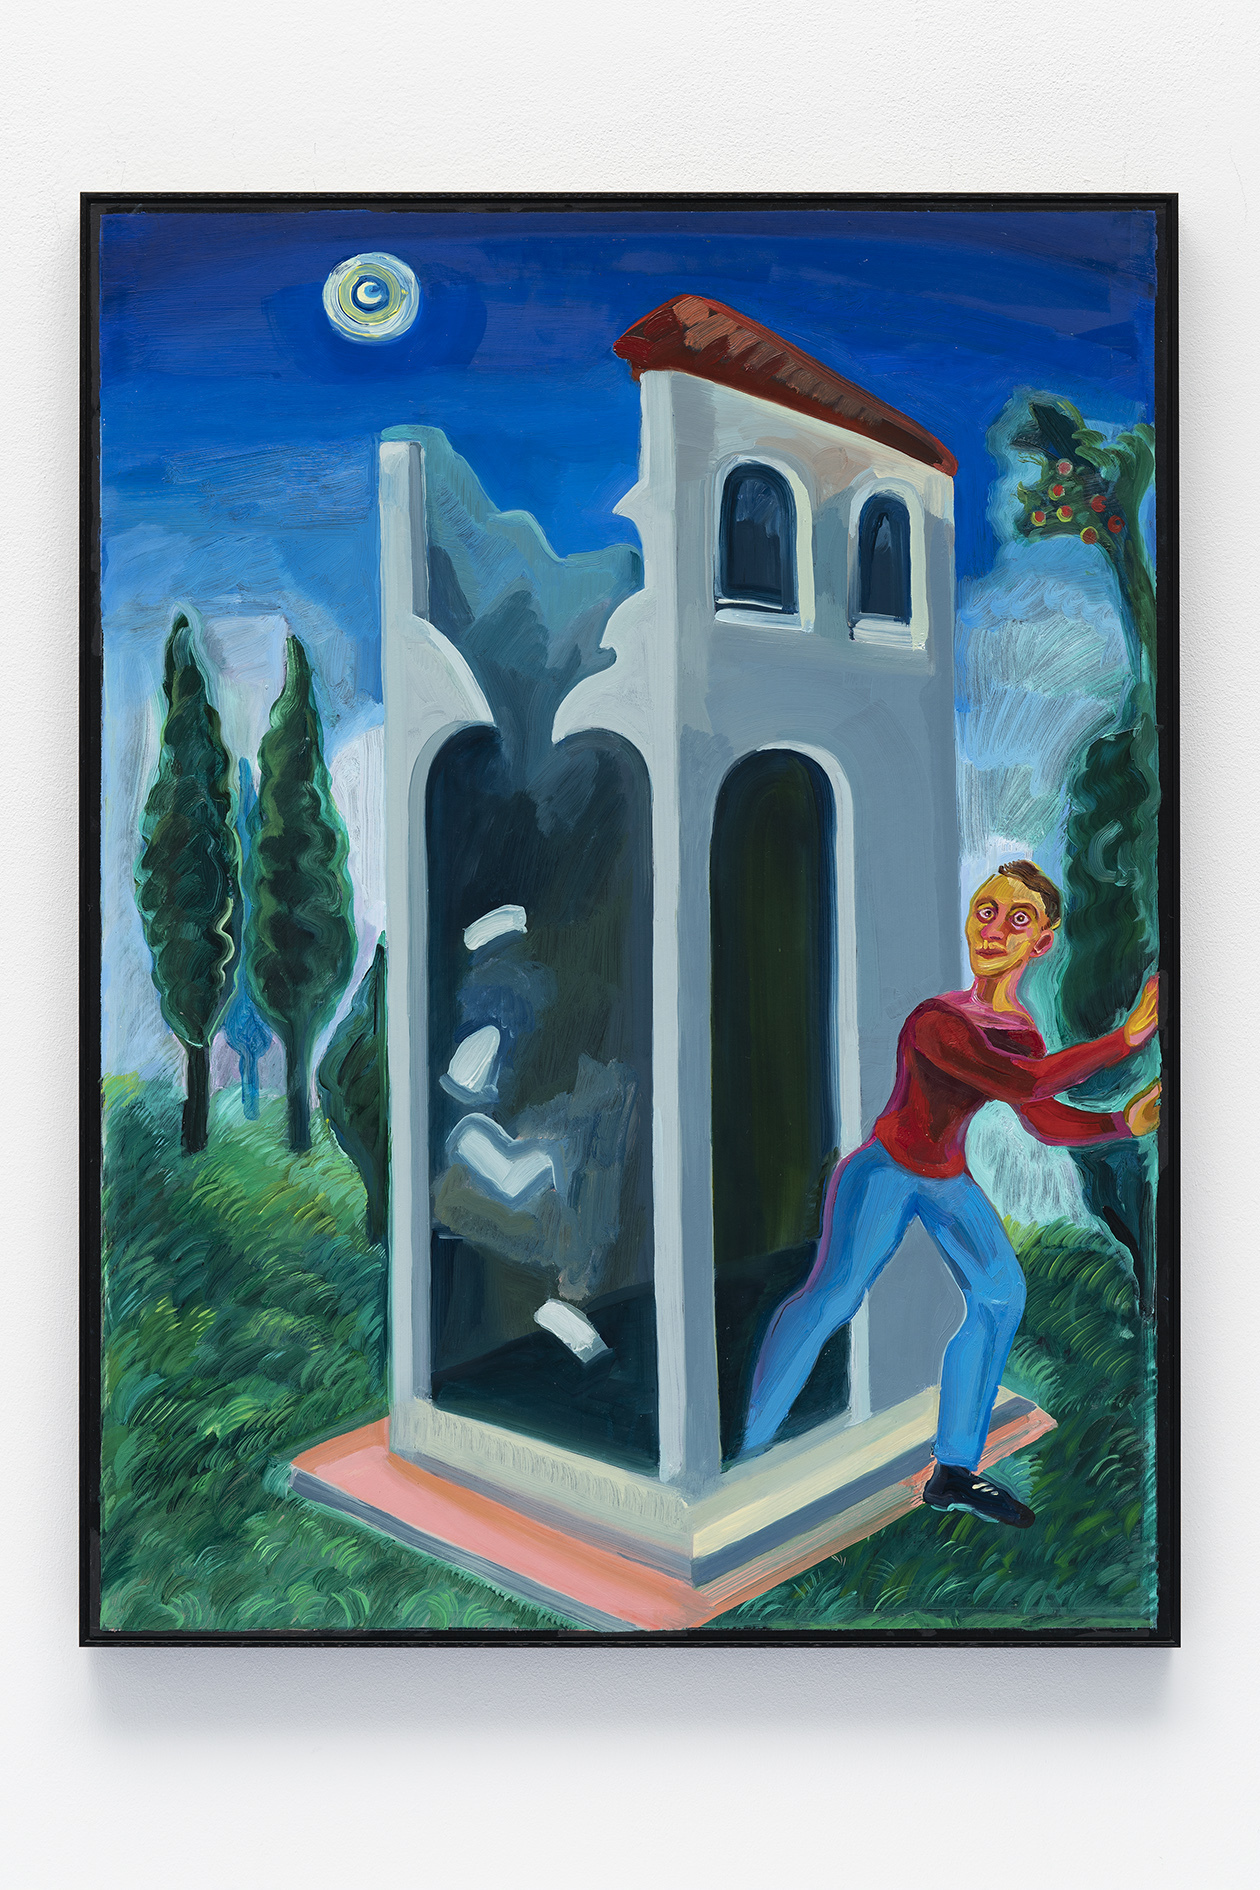 Olivia Parkes, My Father’s House, 2022 – Oil on rag board, 87.6 x 66.4 x 2.5 cm